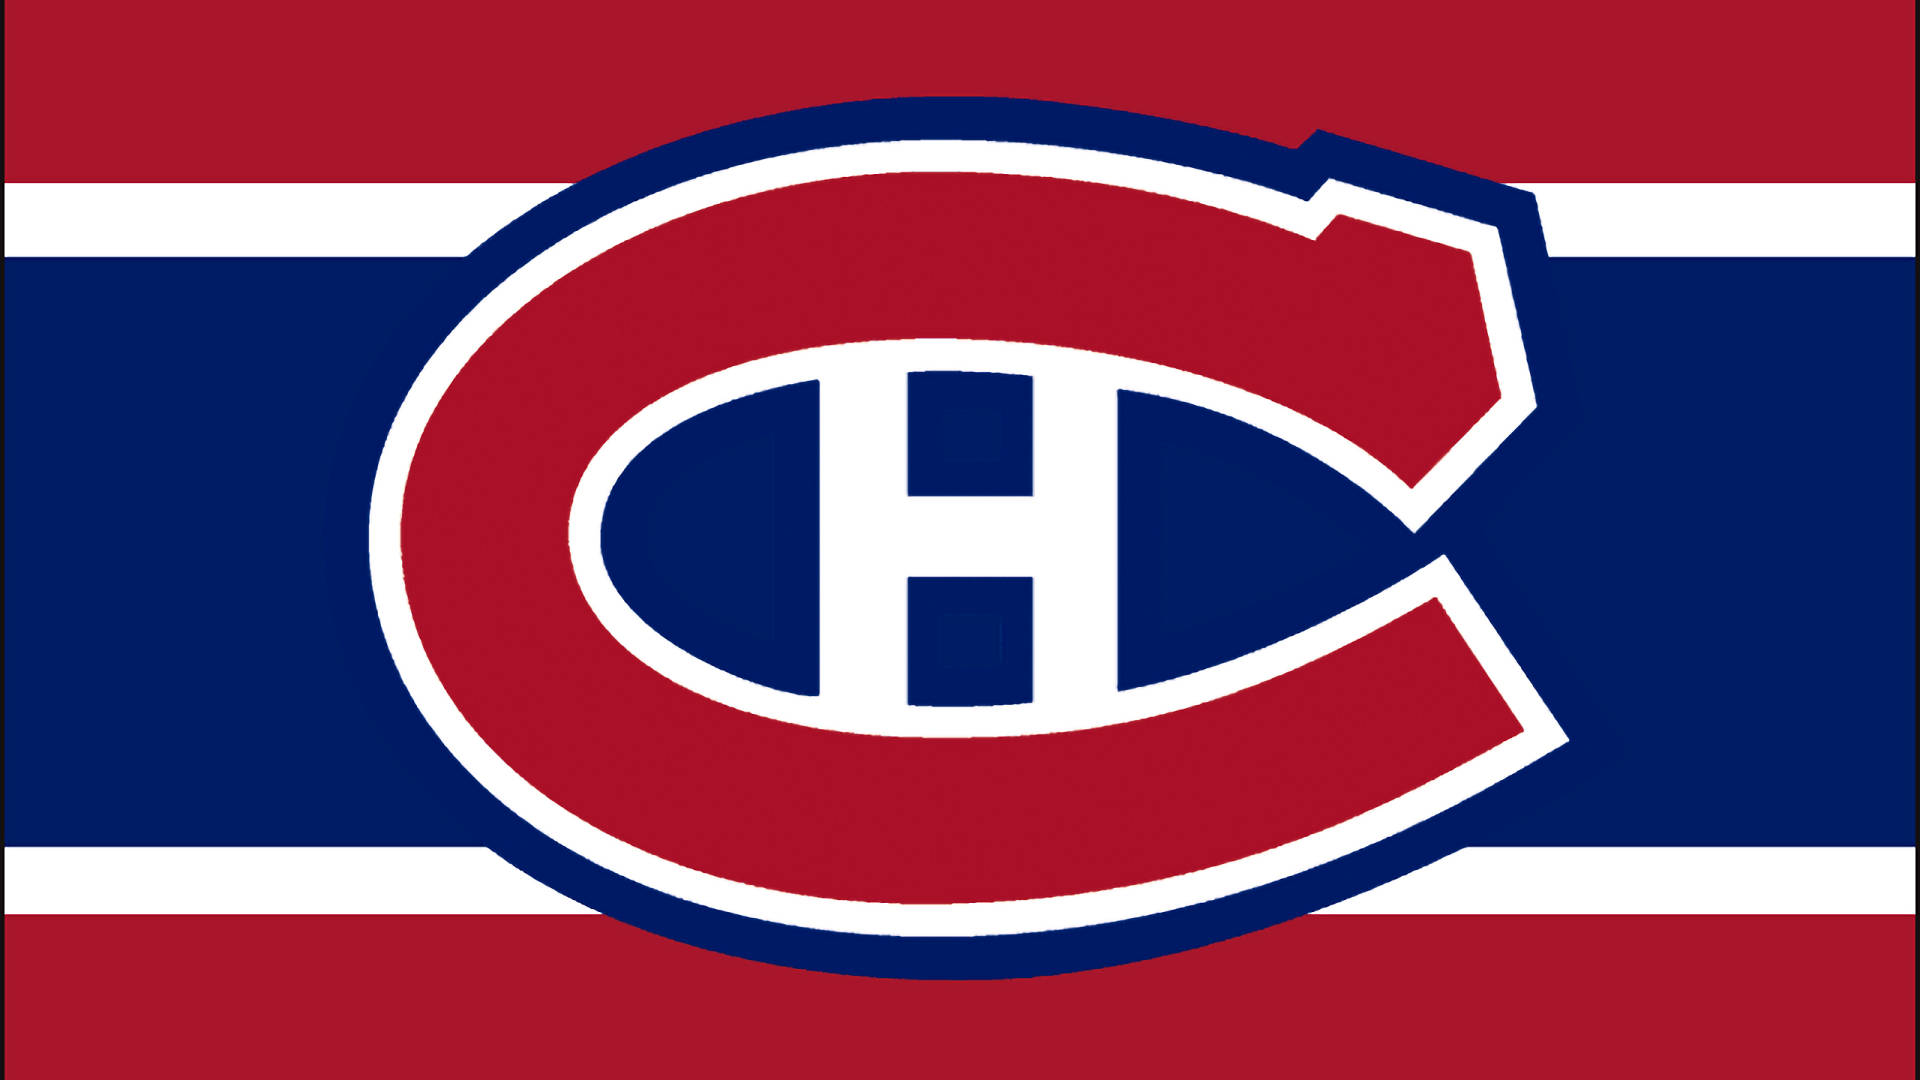 Montreal Canadiens Hockey Team Emblem Background